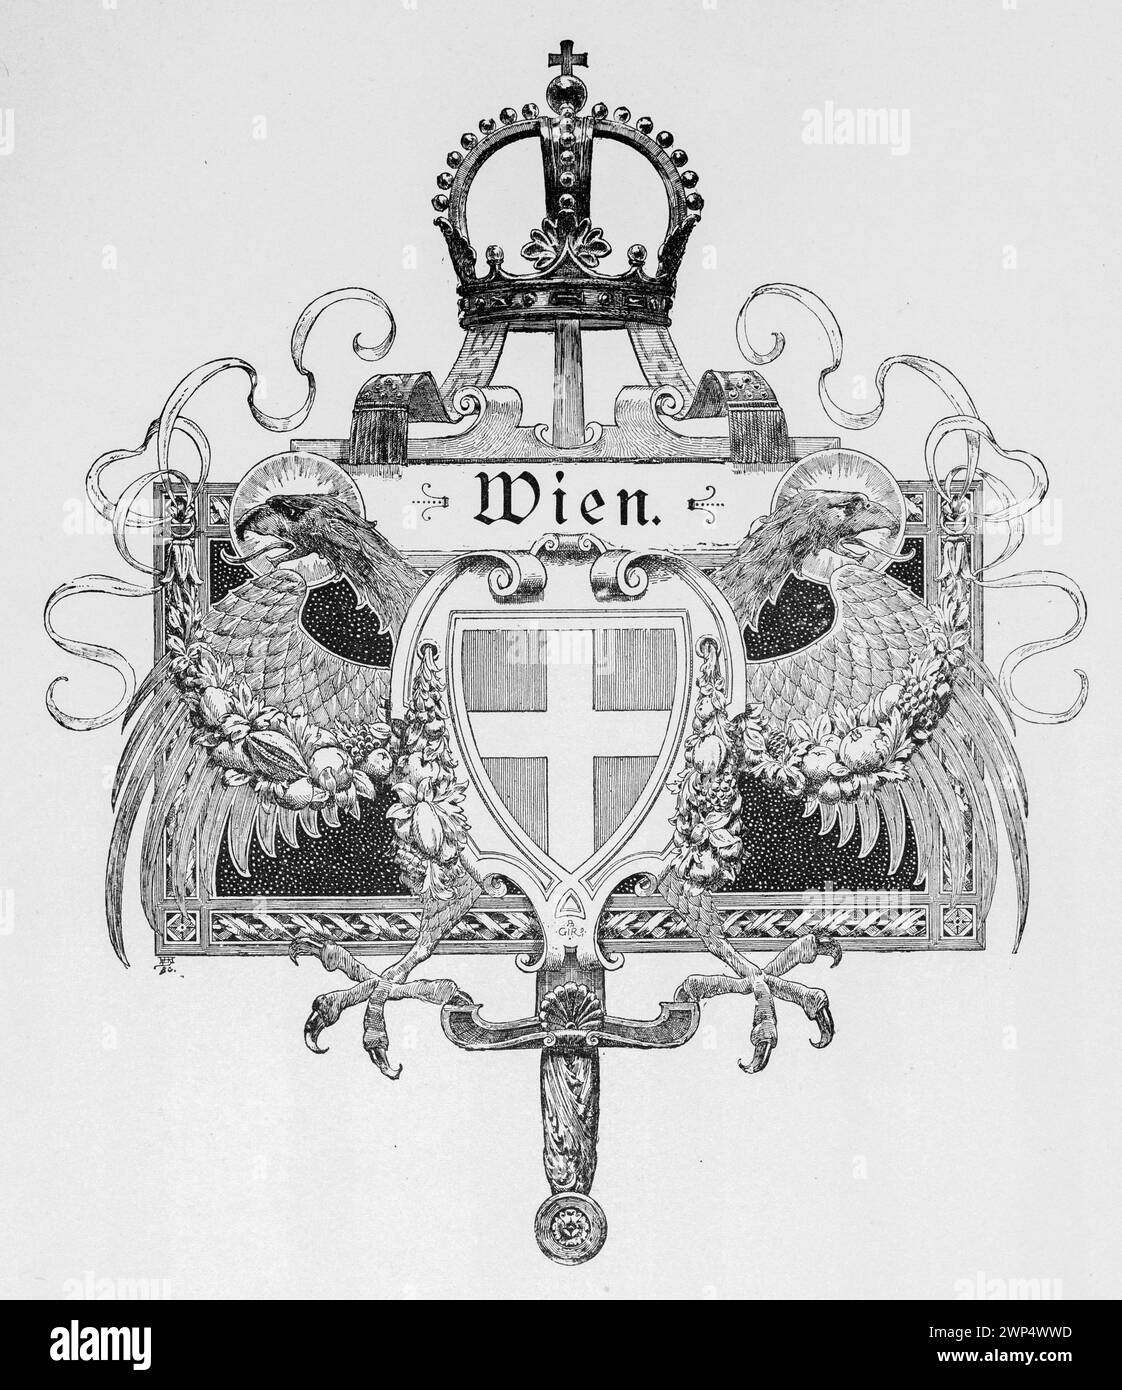 Vienna, emblem, symbol, imperial crown, eagle, sword, ornamentation, Austria, historical illustration 1890 Stock Photo